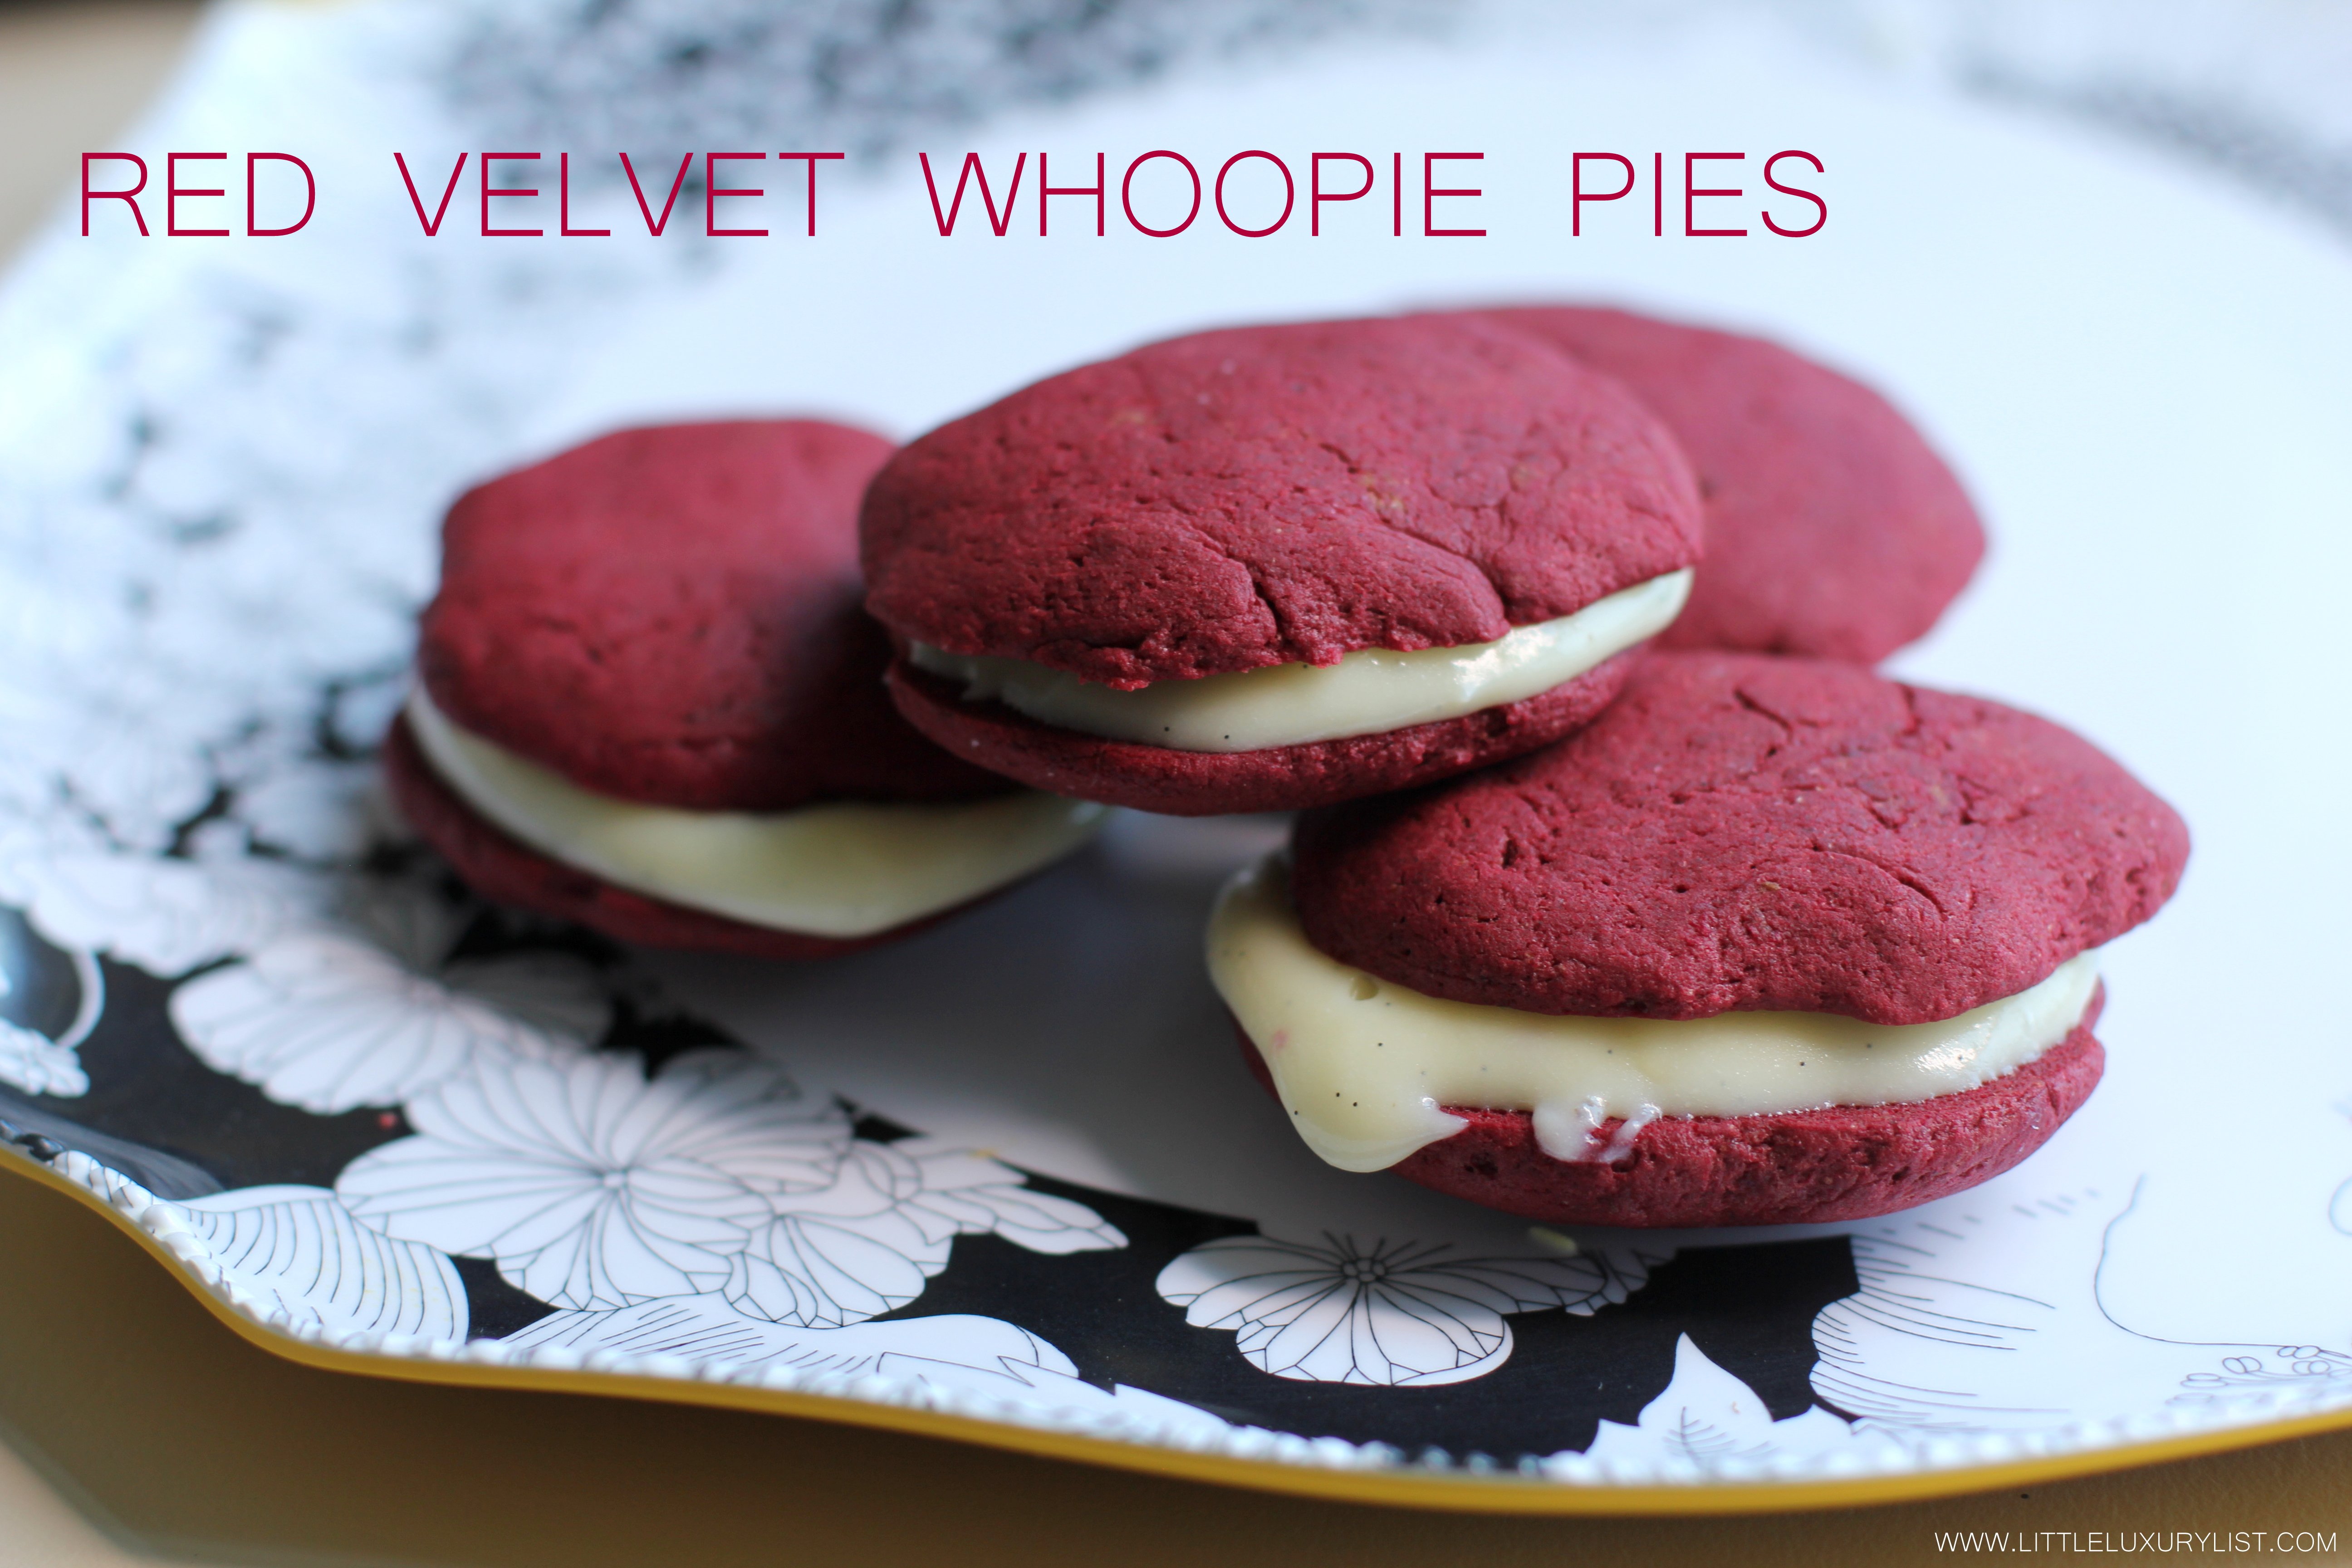 Red velvet whoopie pie side view by little luxury list